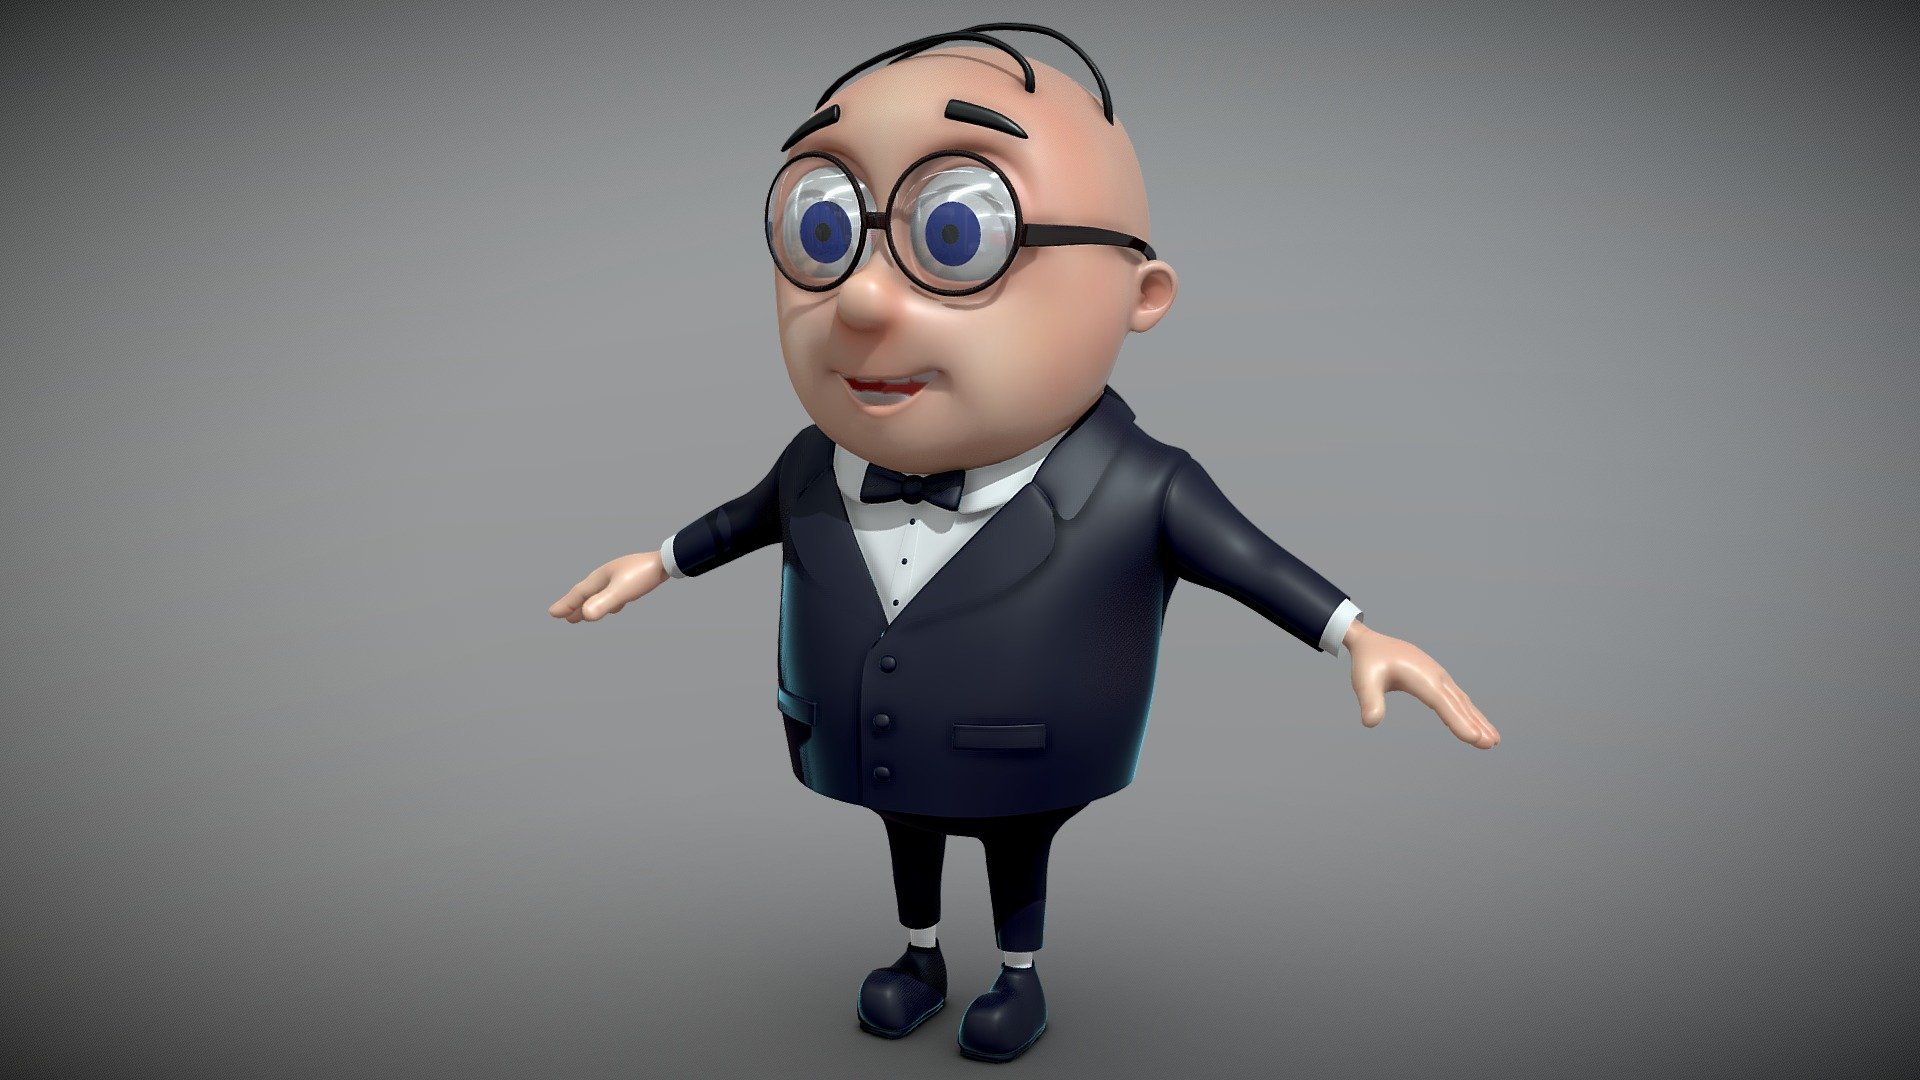 A character I did for insurancemarket.ae, see the whole project here:

https://www.artstation.com/artwork/ELglov - Insurance Market Alfred - 3D model by Shamel Haydar (@shamelhaydar) 3d model